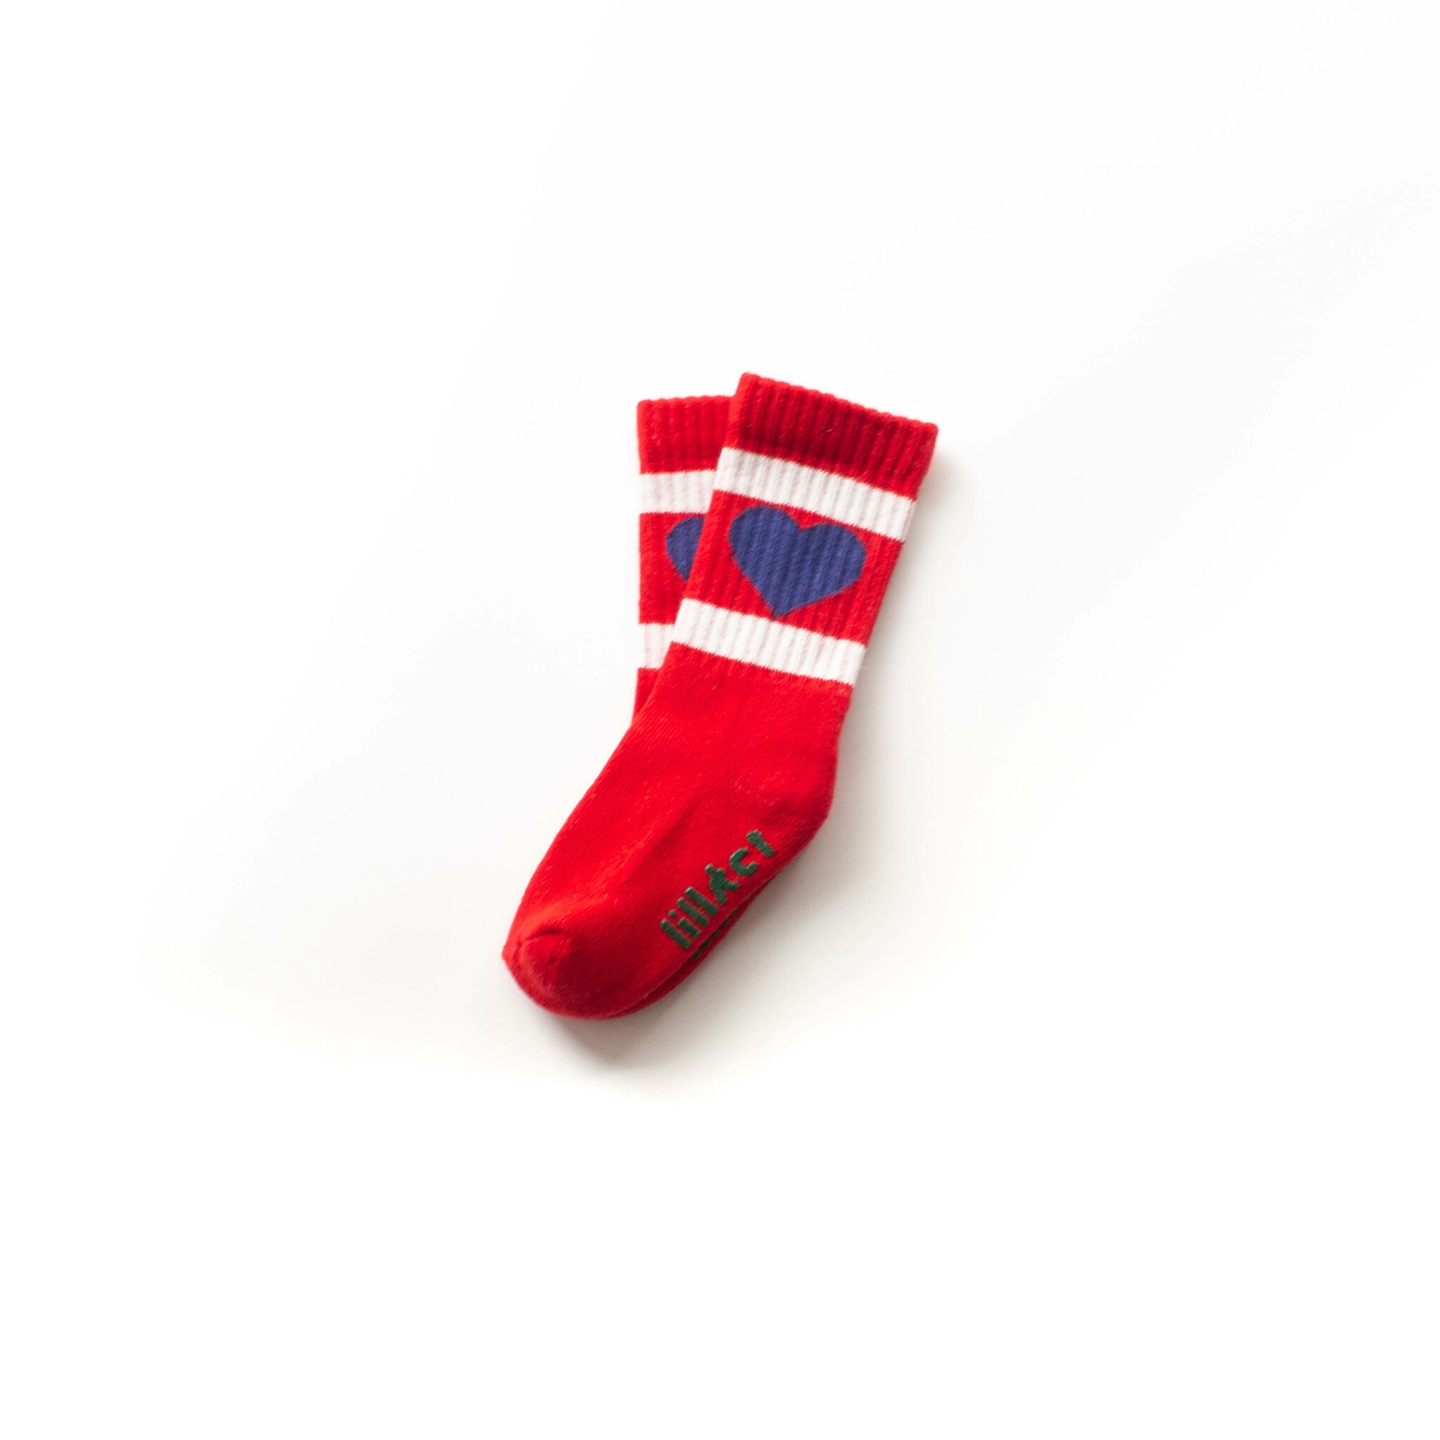 Red Heart Socks - Last pair 0-6 months